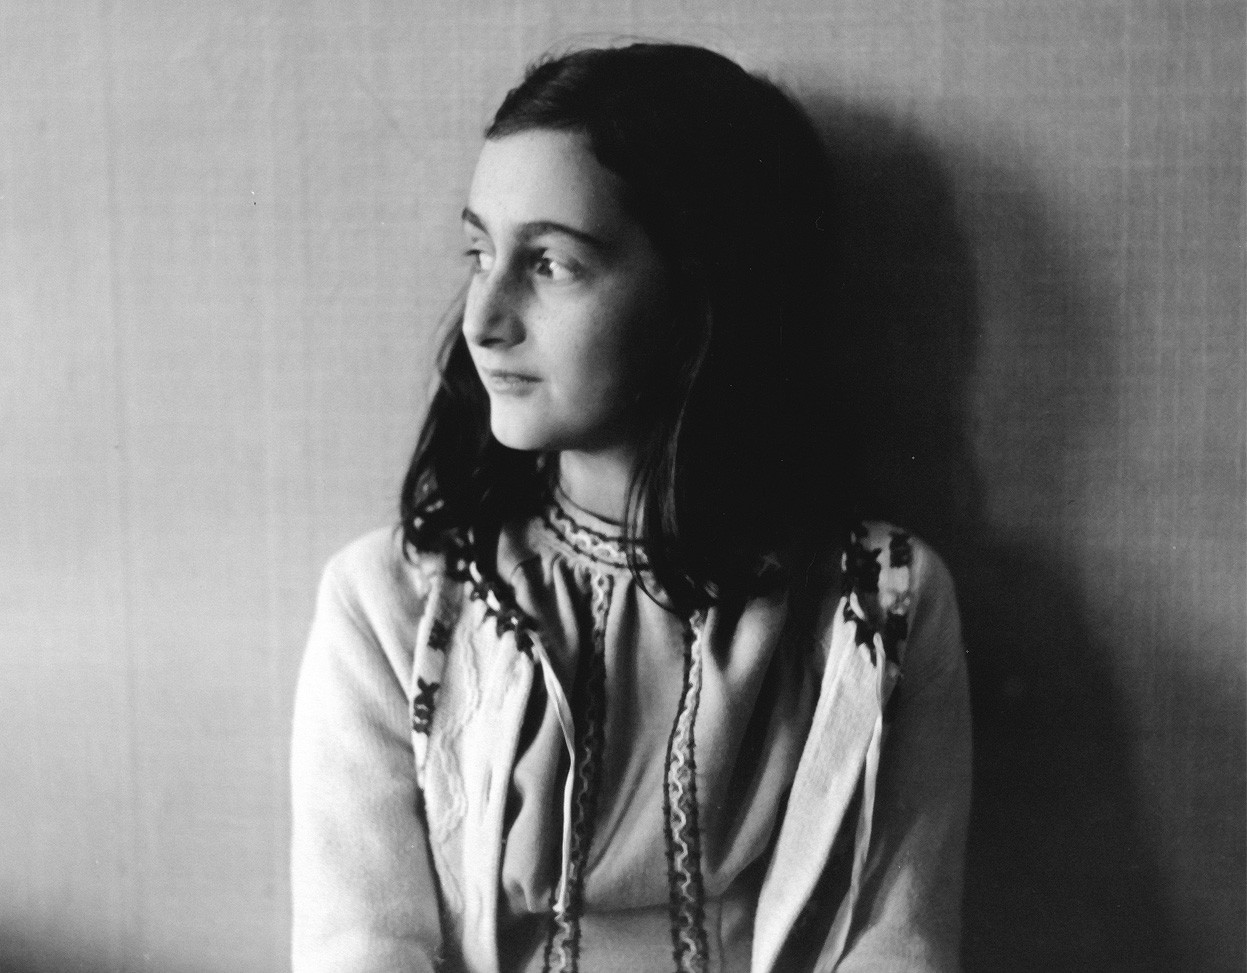  Subastan poema de Ana Frank